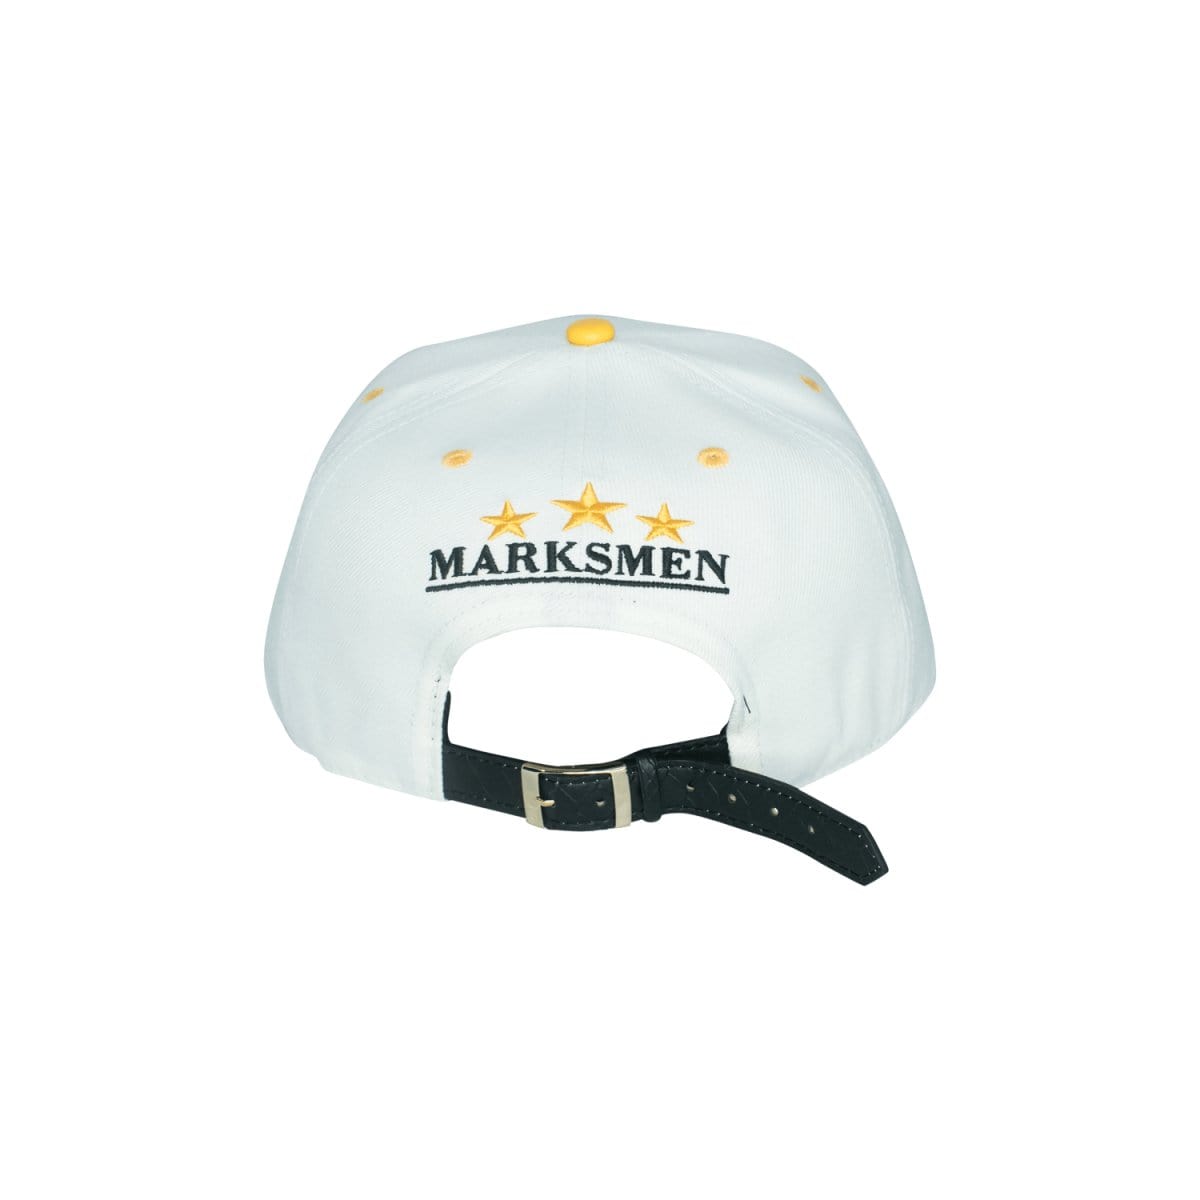 J.Hinton Collections Apparel & Accessories The Marksmen Vintage Cap (Black/Yellow)